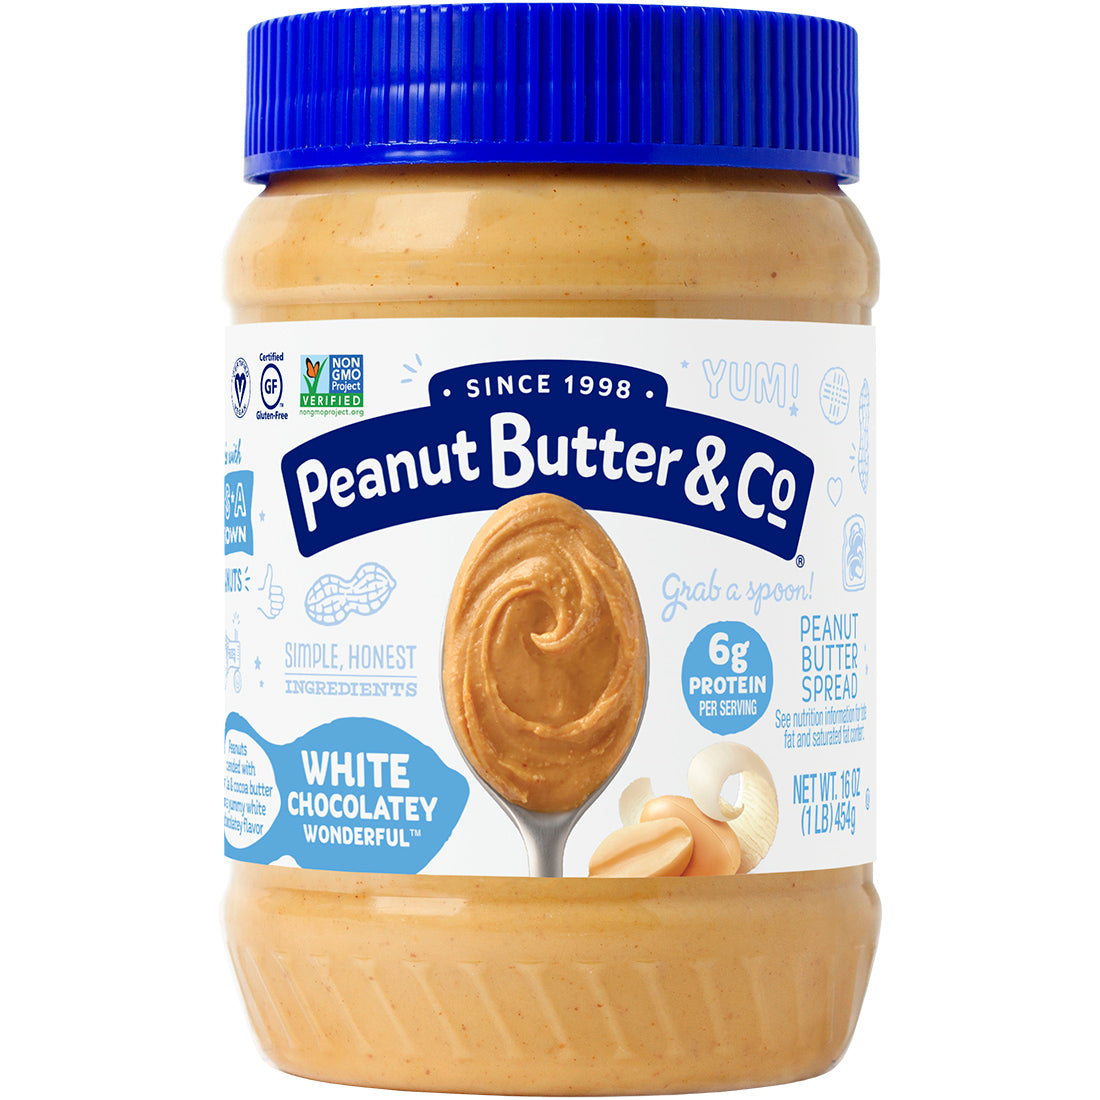 White Chocolatey Wonderful  Peanut Butter & Co. – Peanut Butter & Co. 